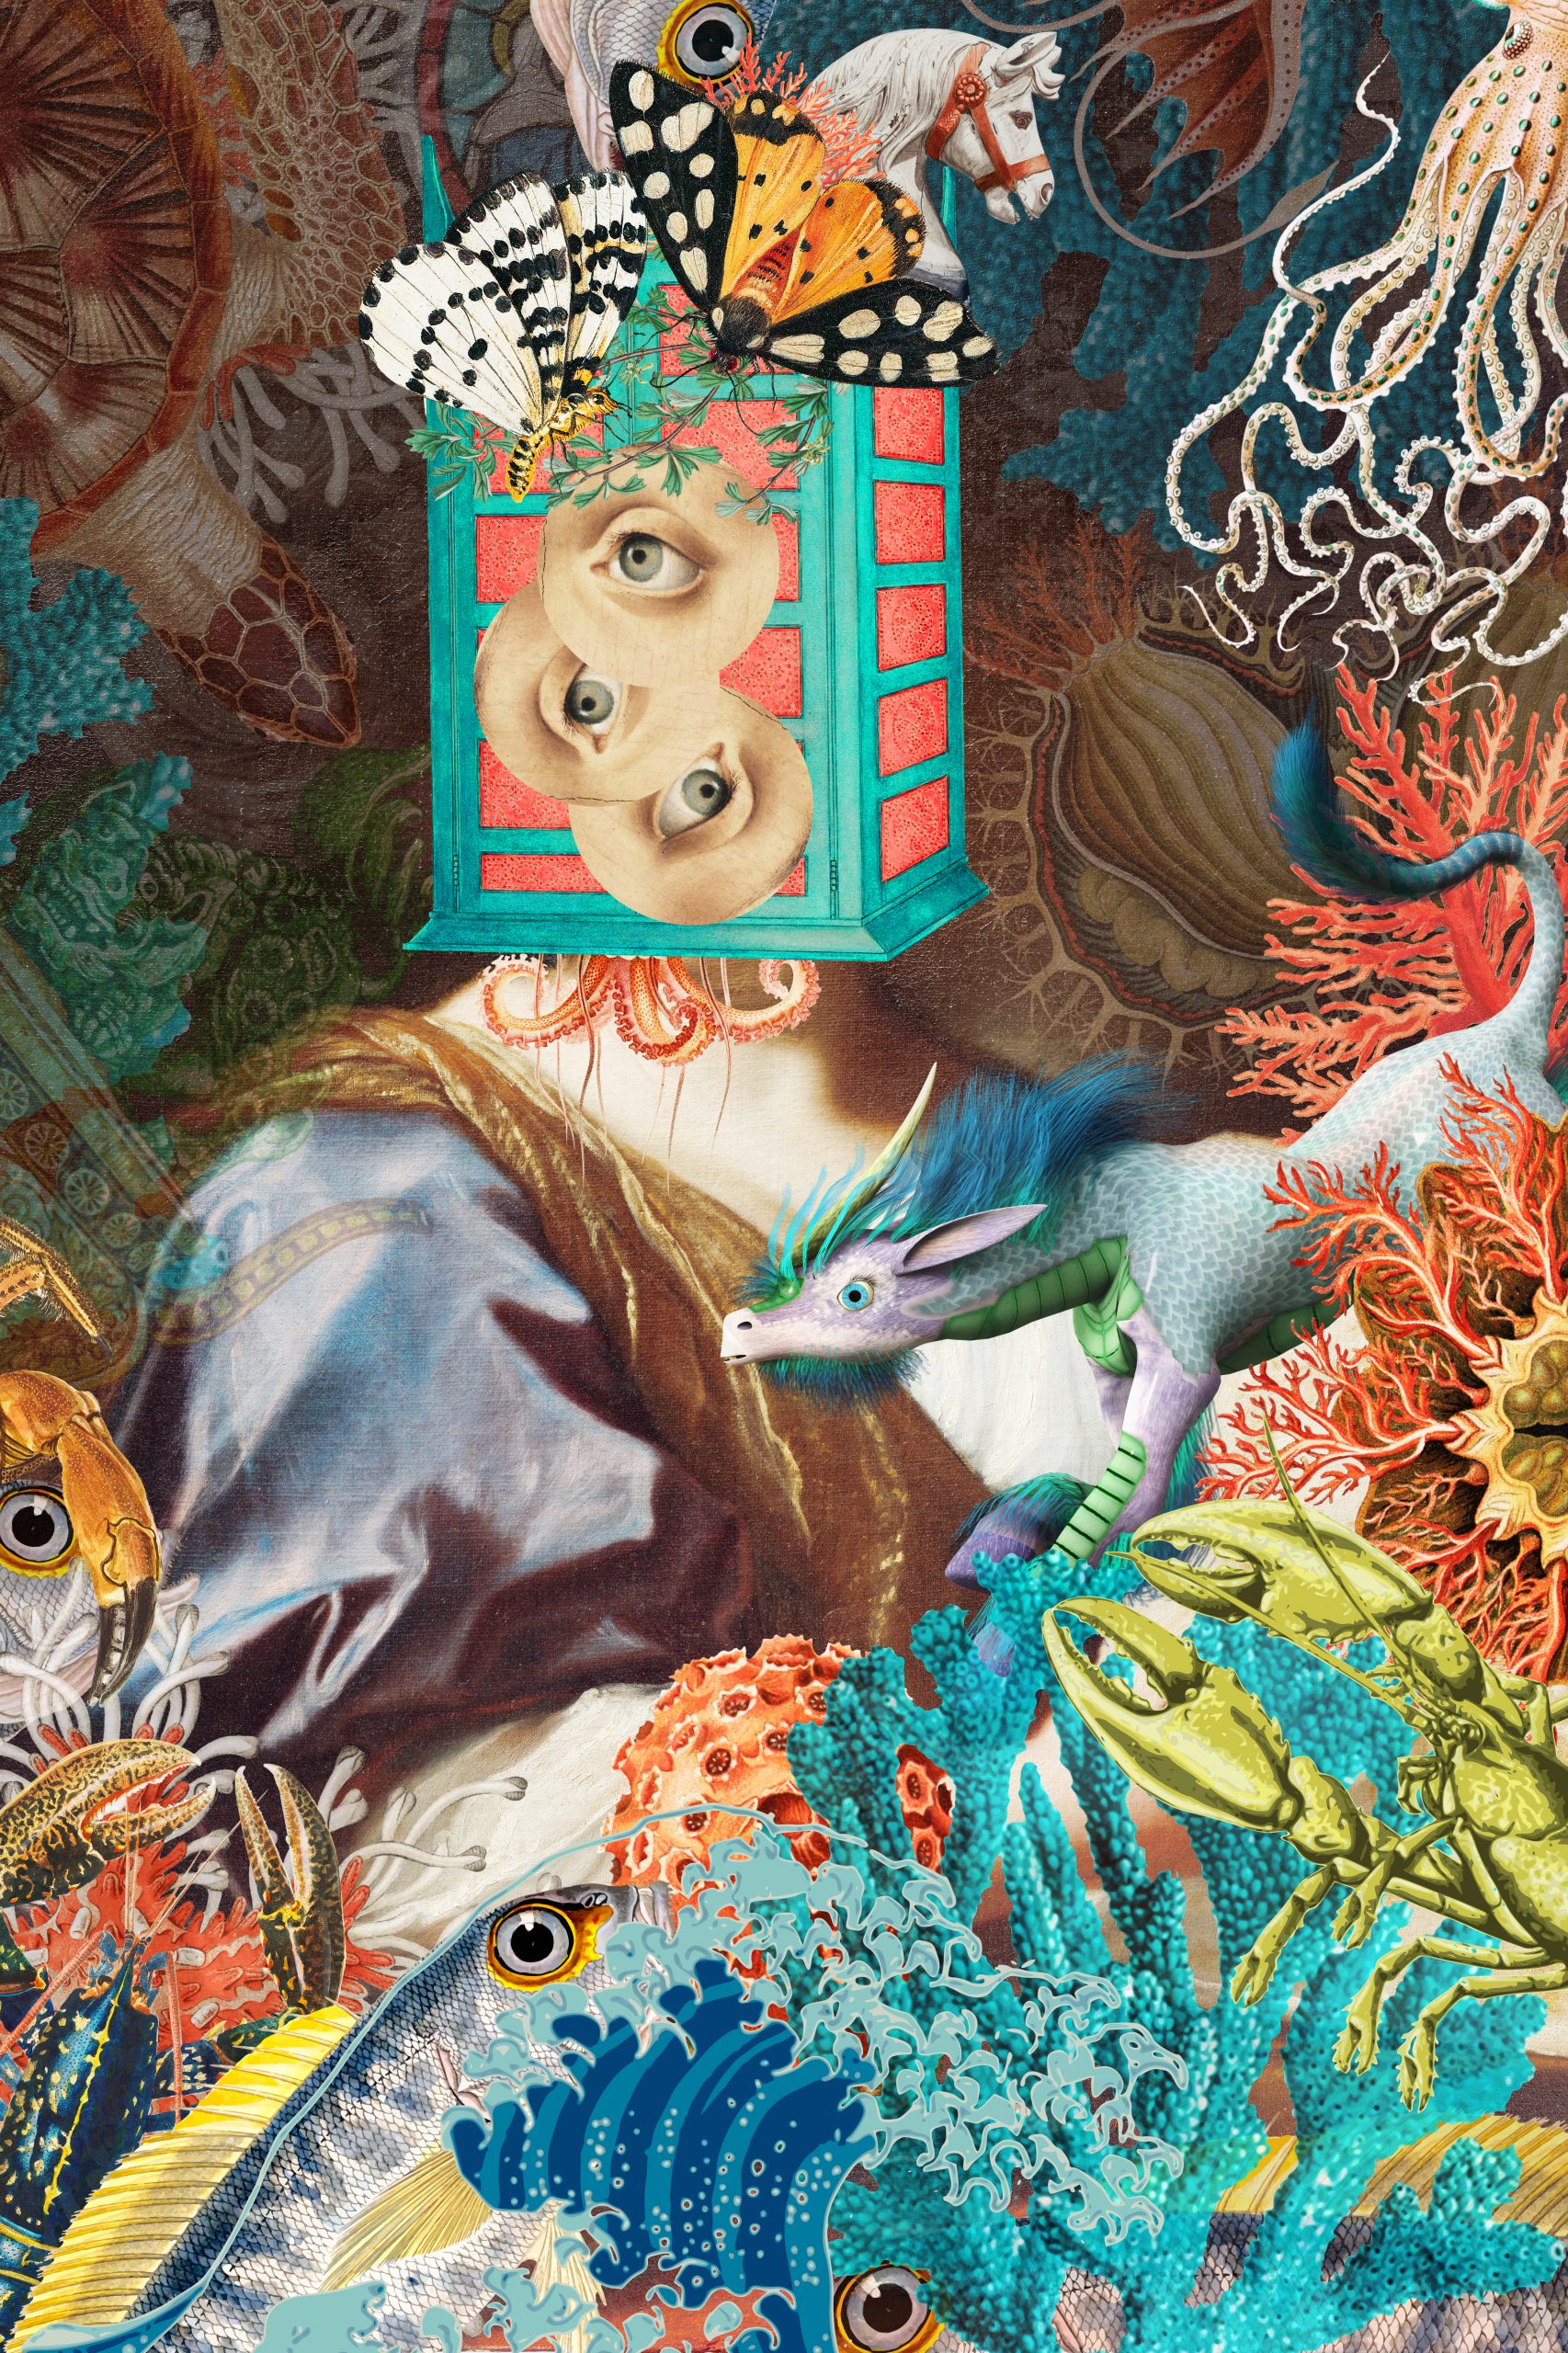 Undersea Fantasy. Limited Edition Digital Collage Print On Canvas